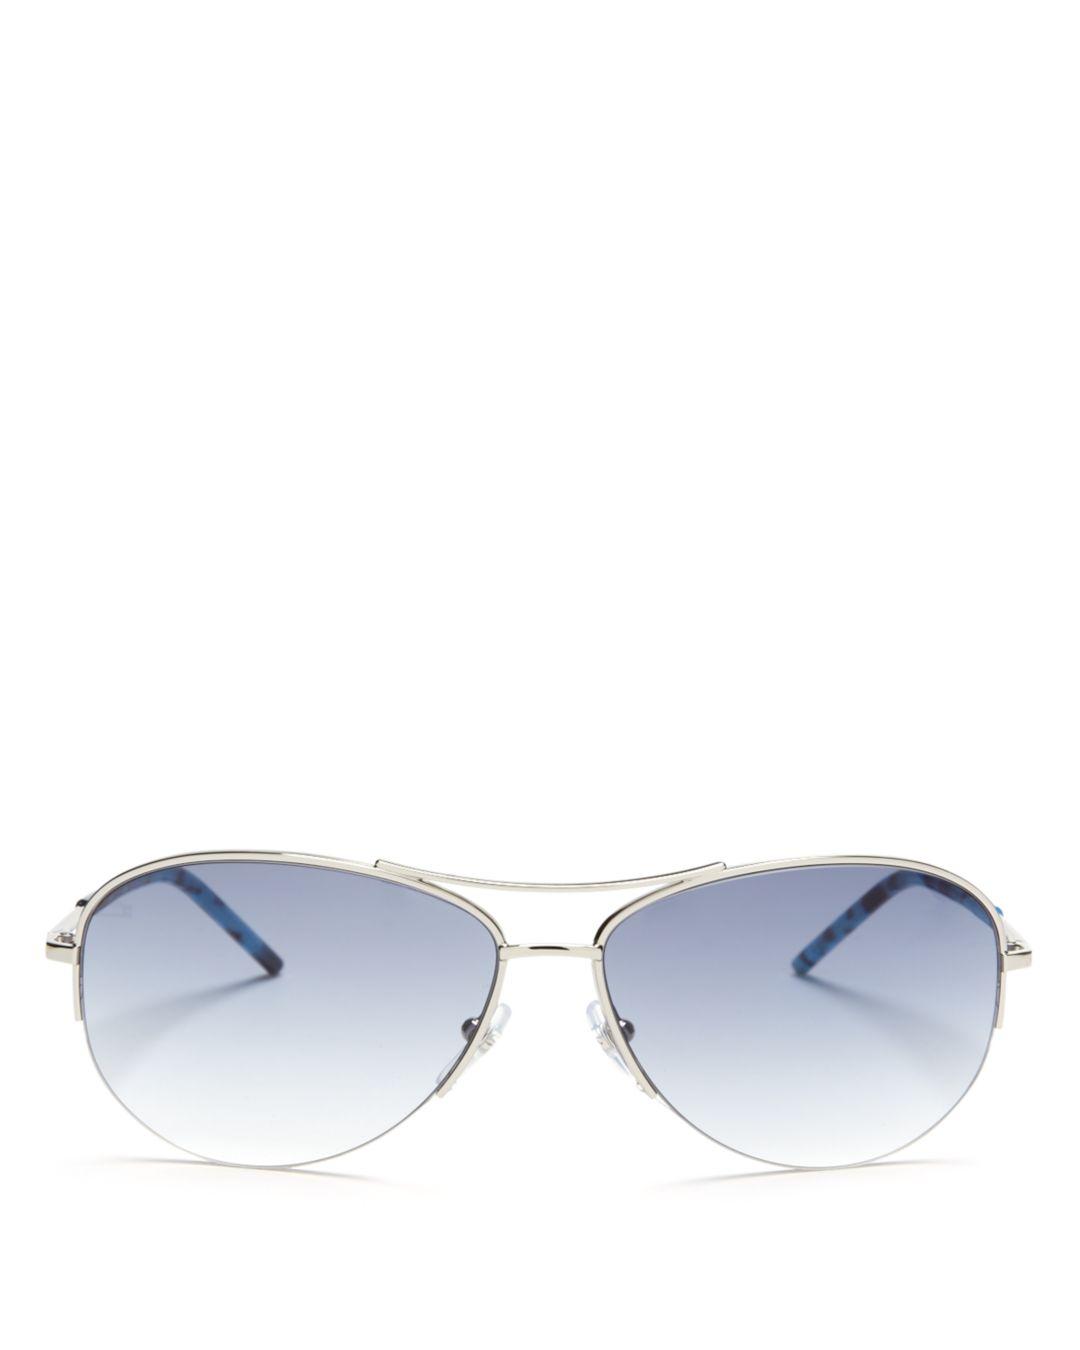 Marc Jacobs Women's Rimless Aviator Sunglasses in Gray - Lyst